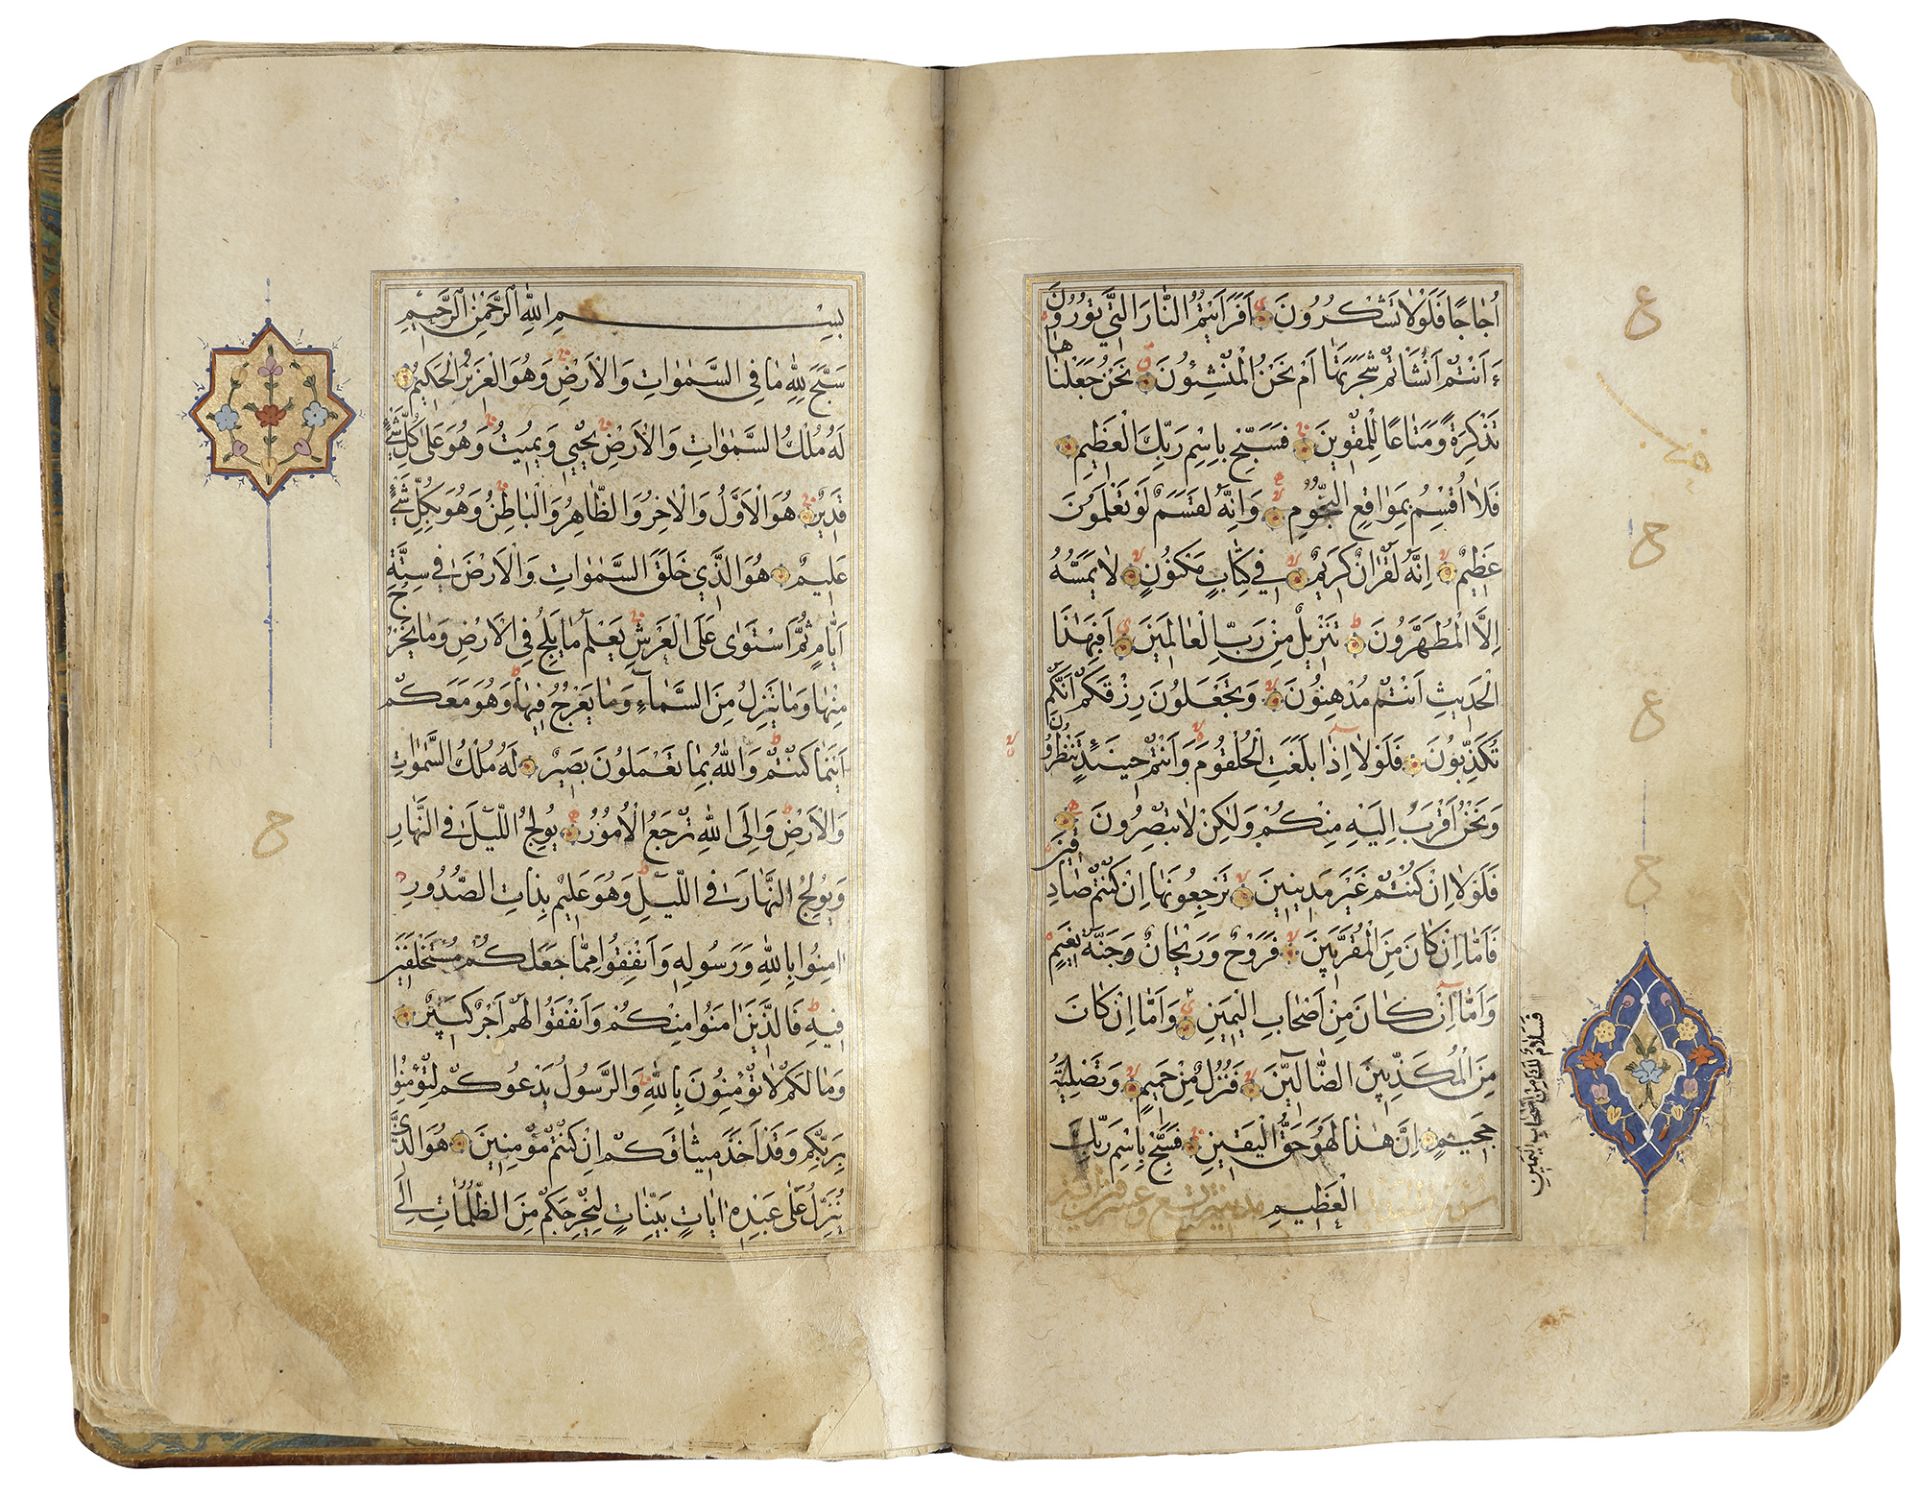 A PERSIAN SAFAVID QURAN, PERSIA VARAMIN, COPIED BY MIRZAIL NUR AL-DIN MUHAMMED AL-RAZI IN 1090 AH/16 - Image 3 of 4